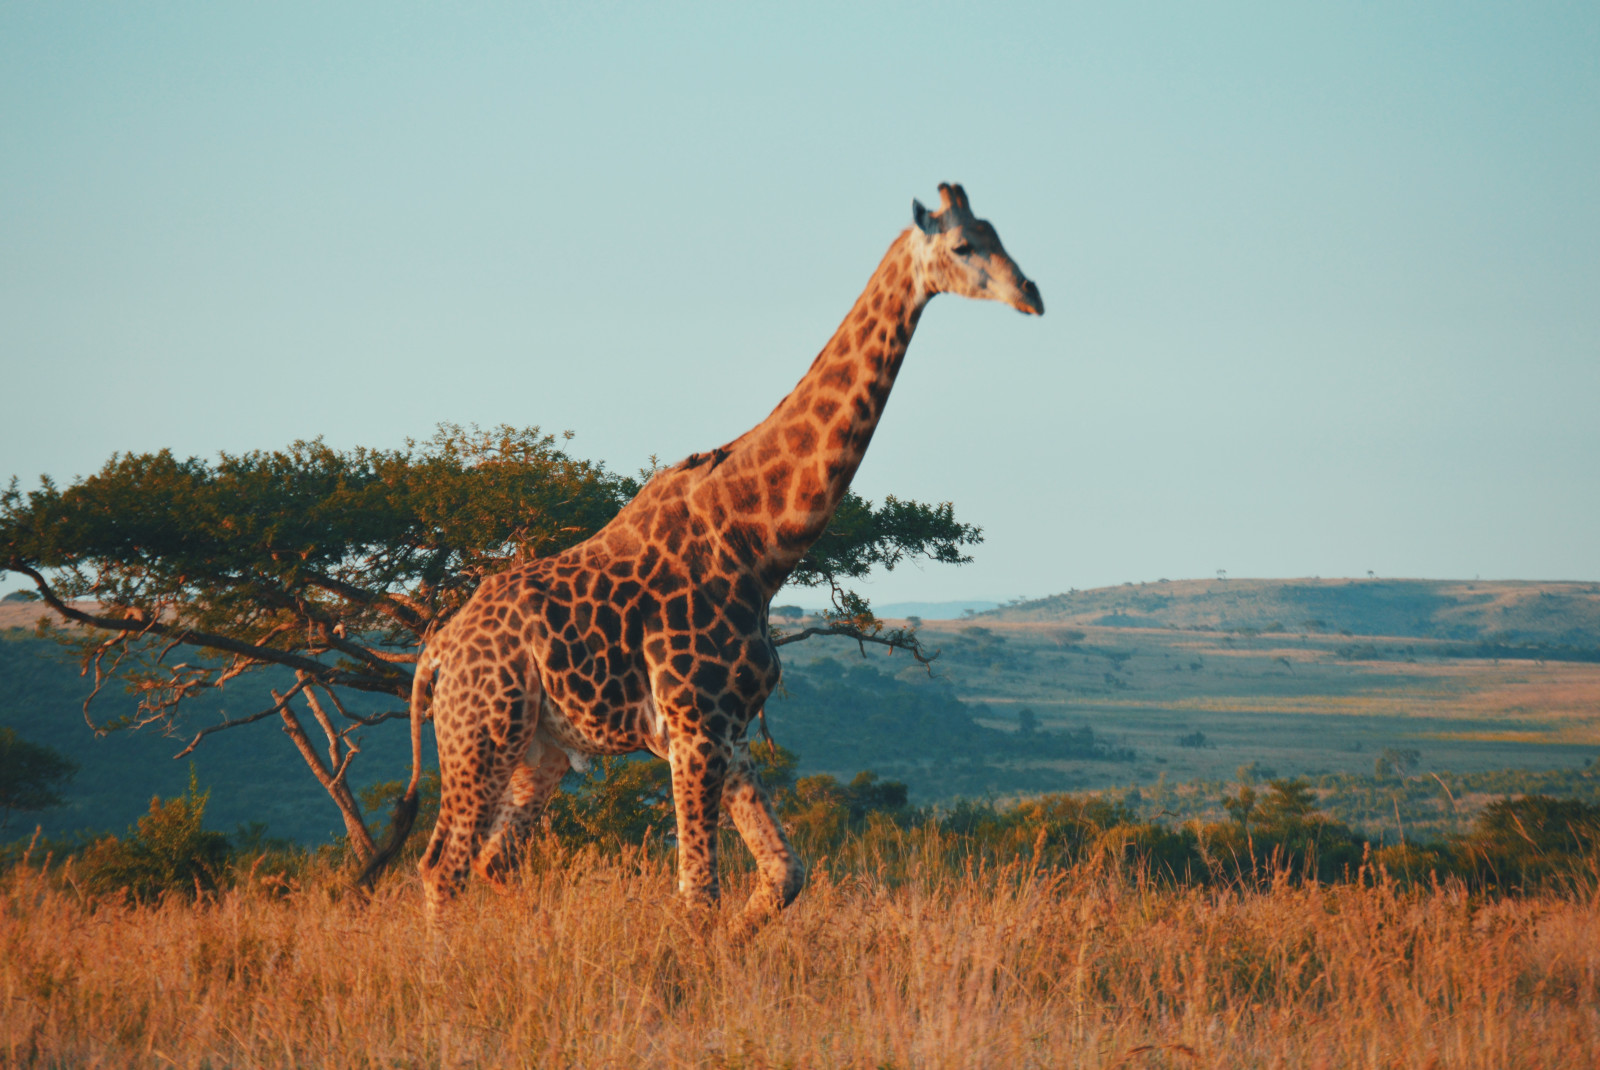 Giraffe, South Africa Travel Guide